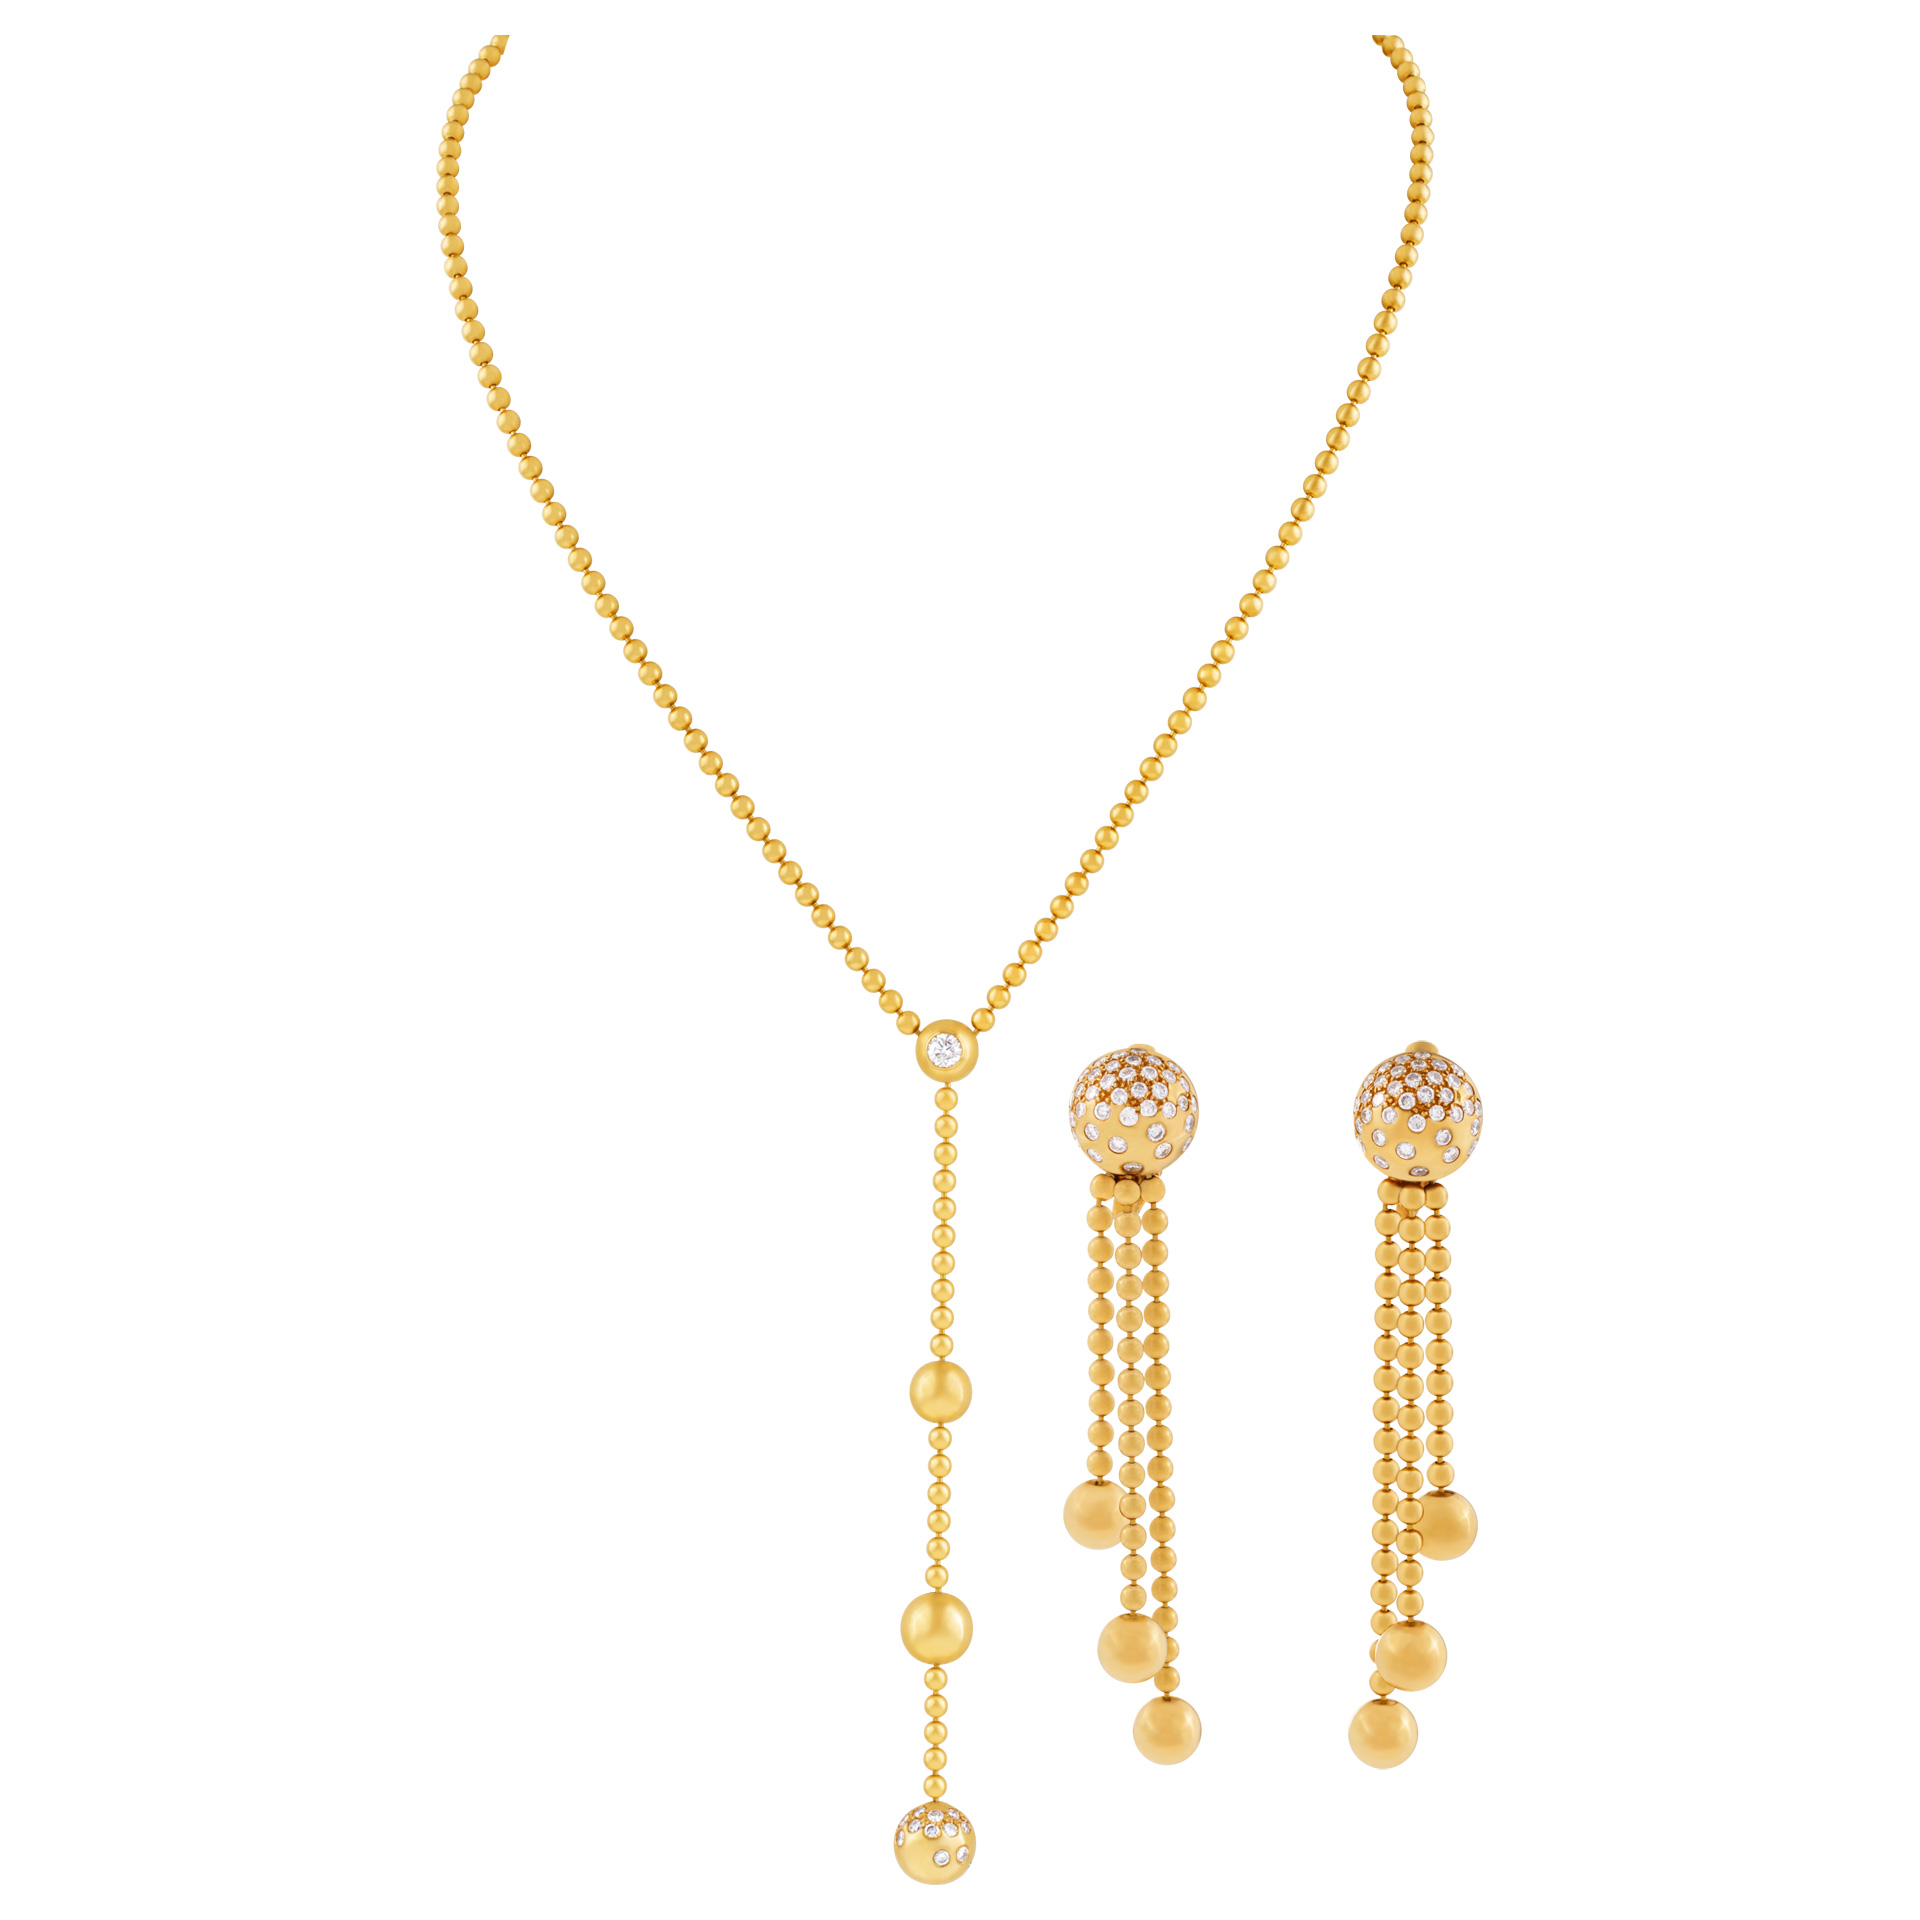 Cartier Pluie de Diamants earrings in 18K yellow gold